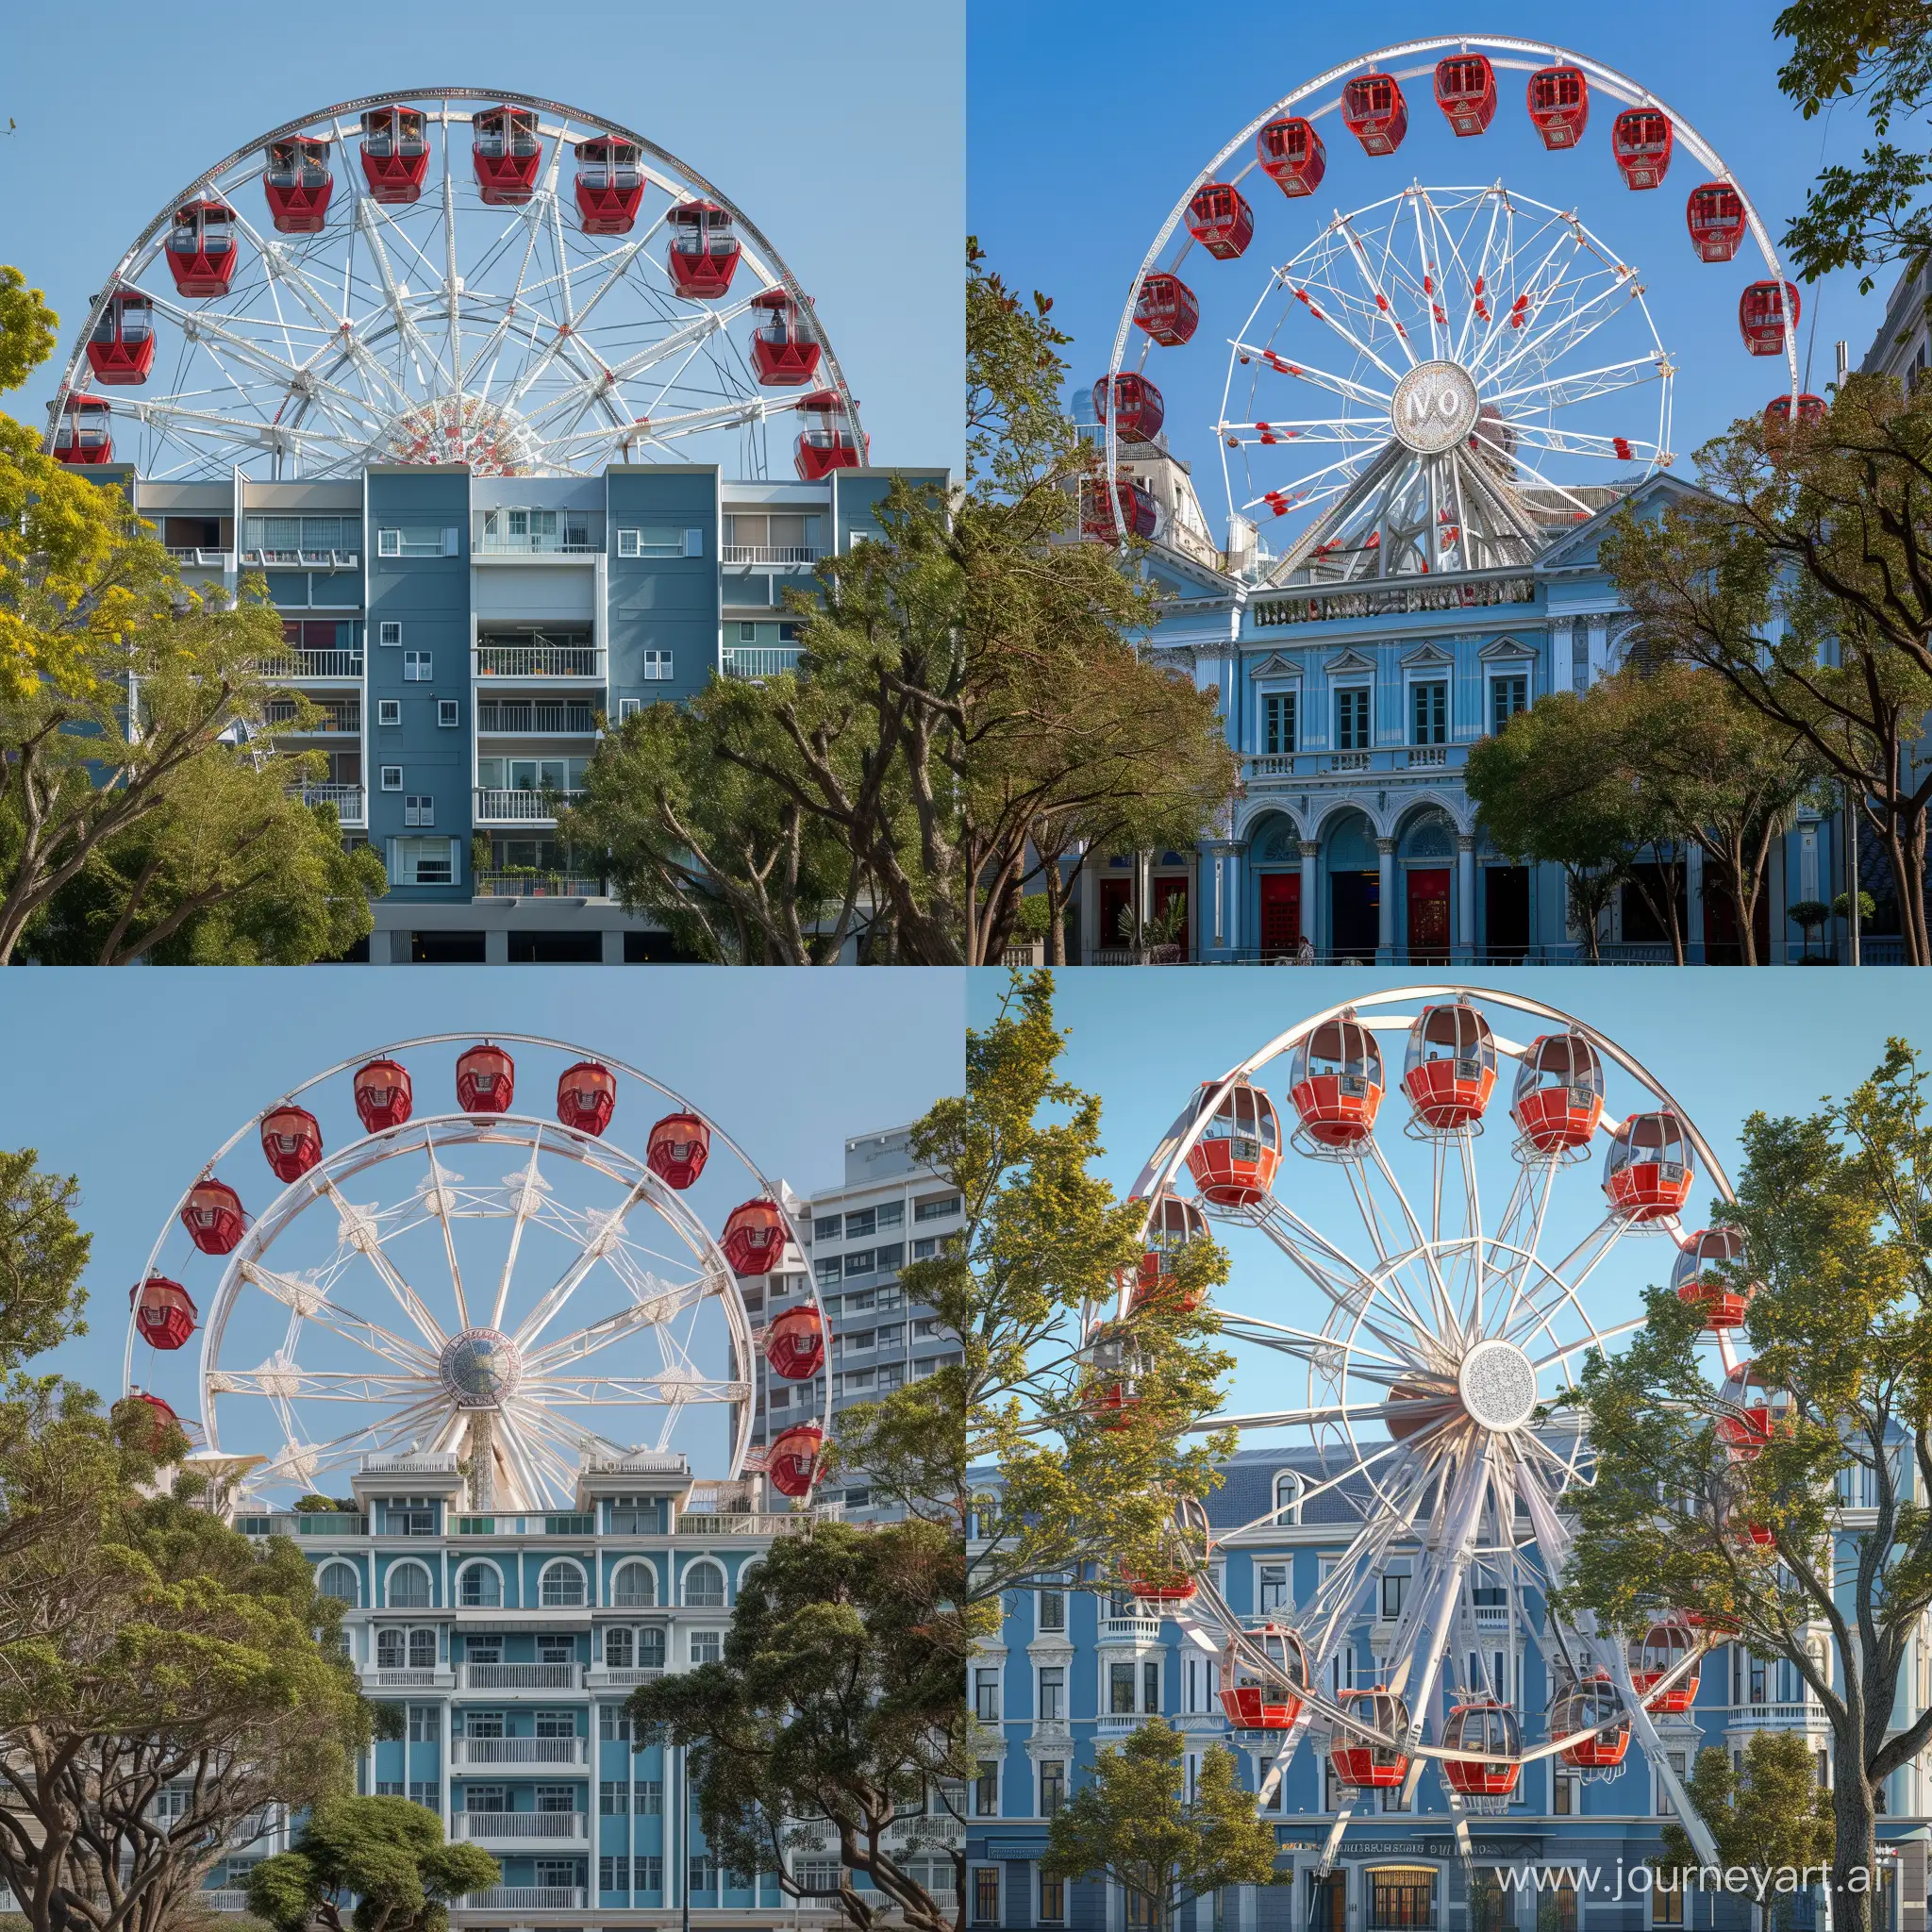 Charming-Red-Gondolas-Ferris-Wheel-Against-Blue-Sky-and-Building